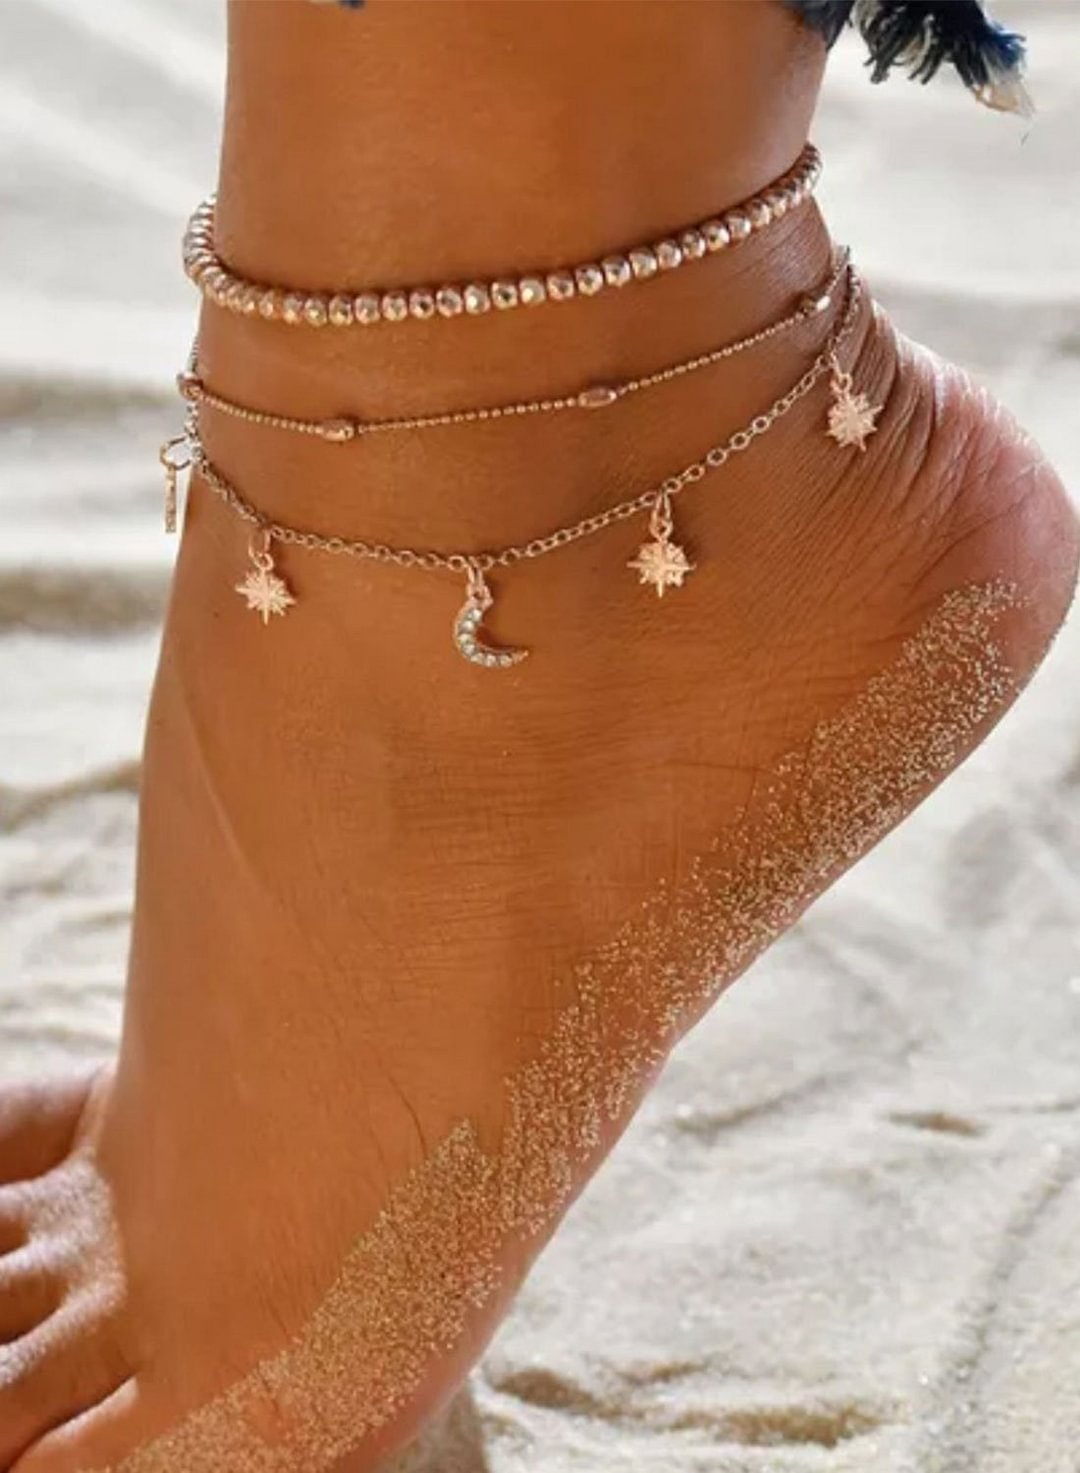 Women's Star Moon Chain Anklets Bracelets Charm Beach Jewelry
